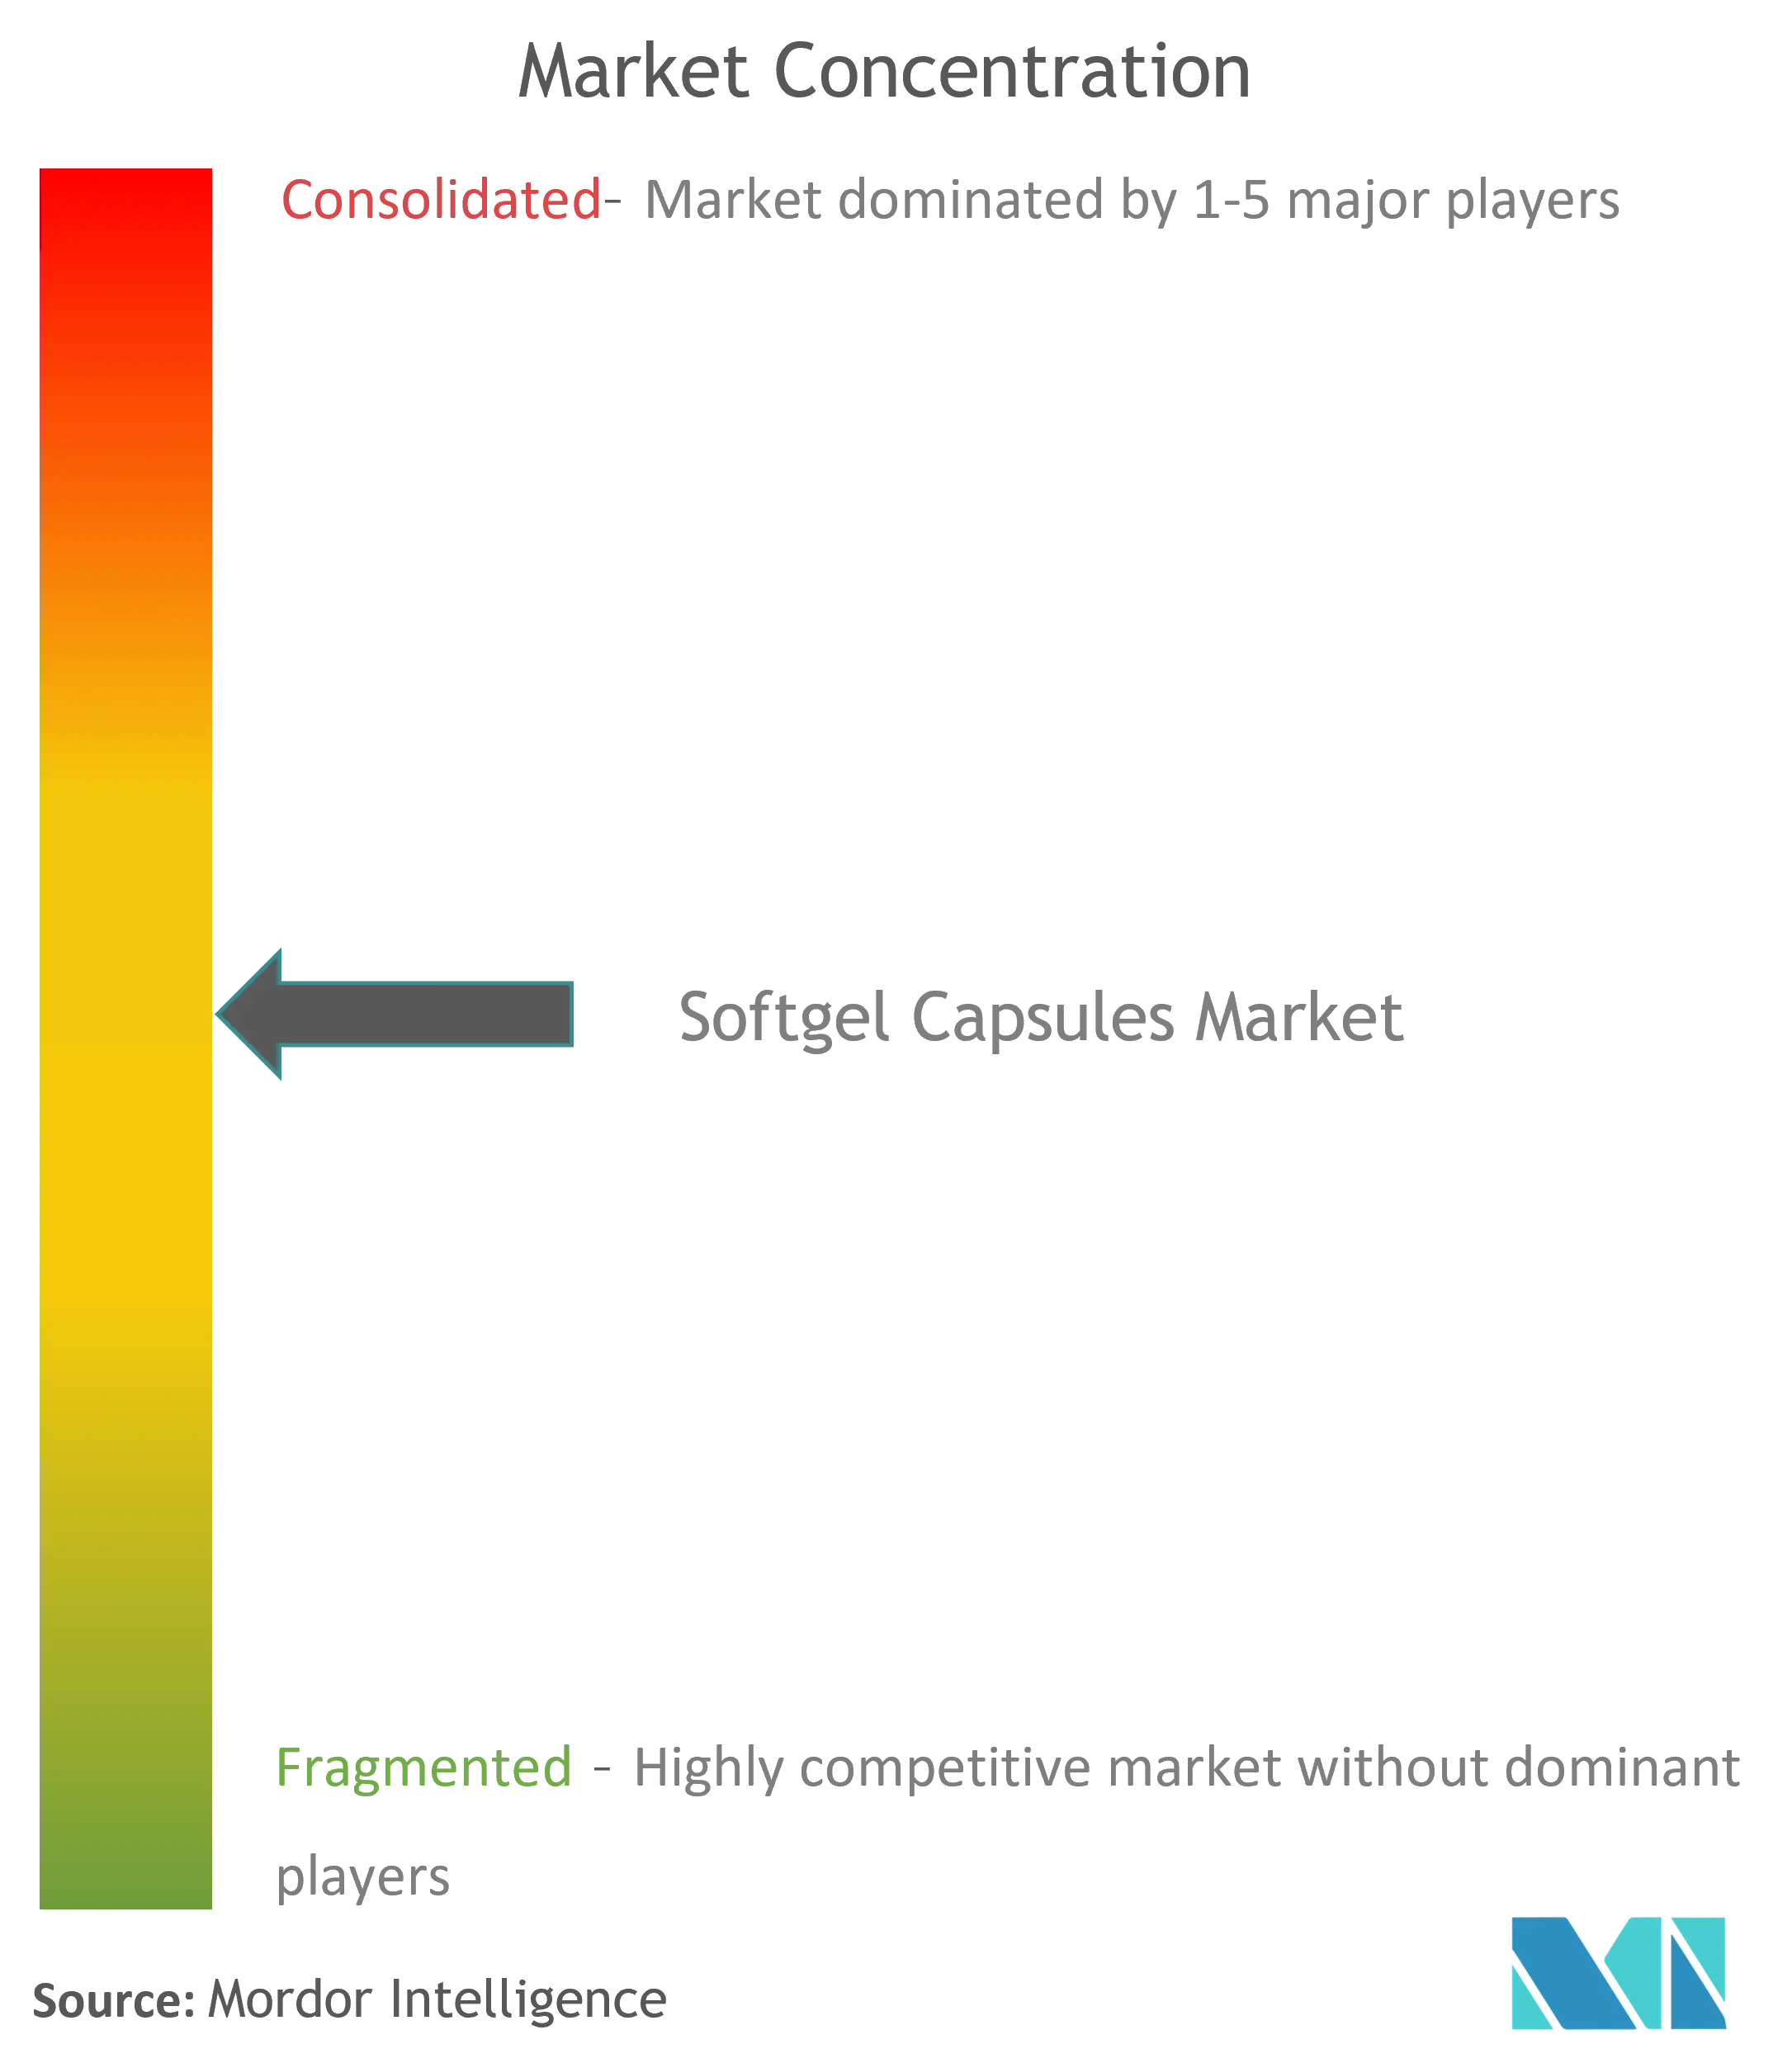 Softgel Capsules Market Concentration